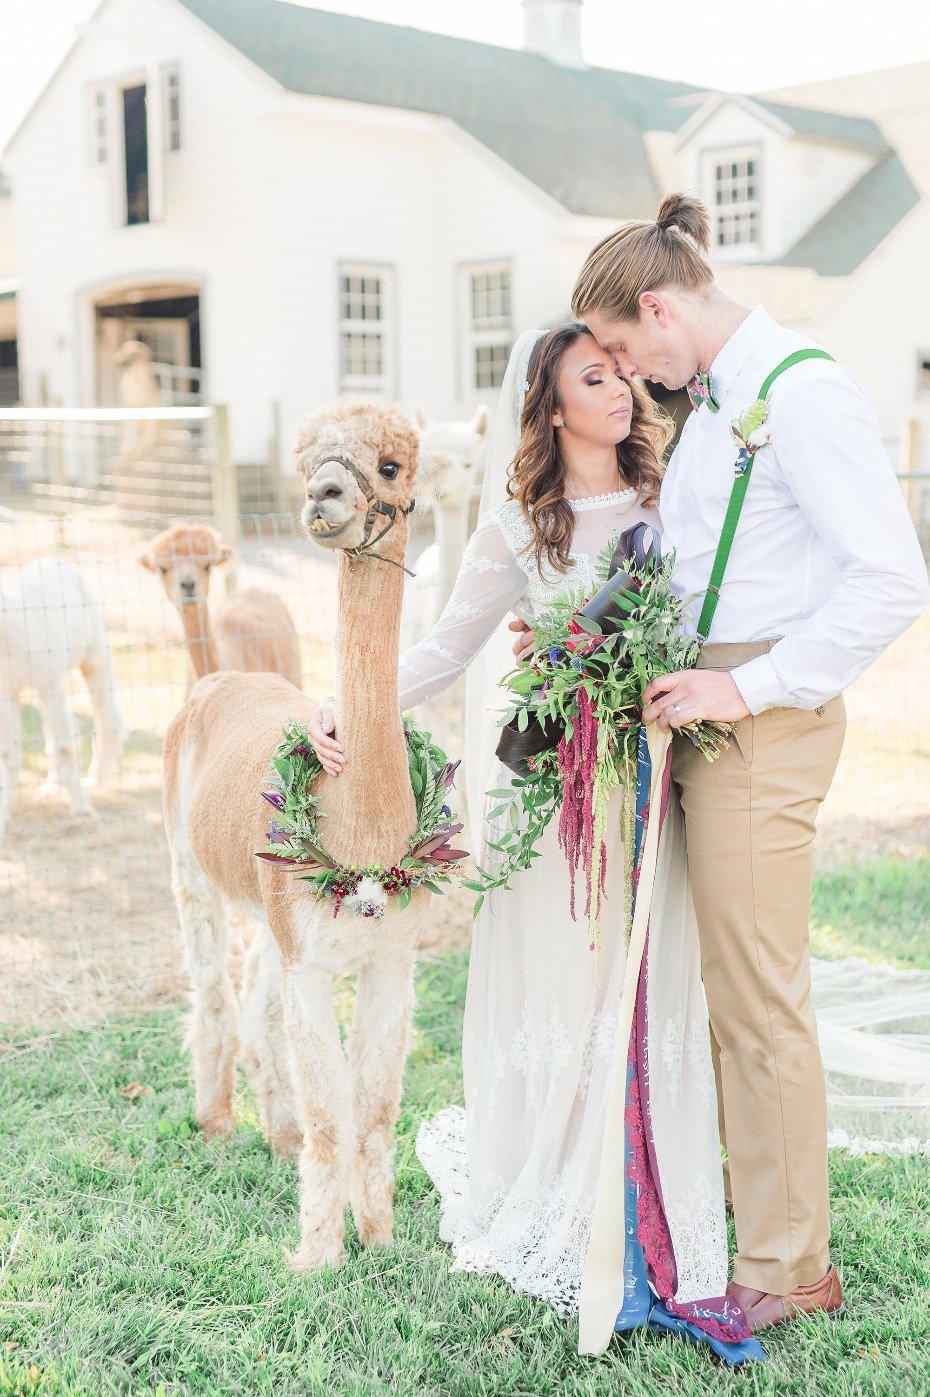 Alpaca farm wedding ideas we love!